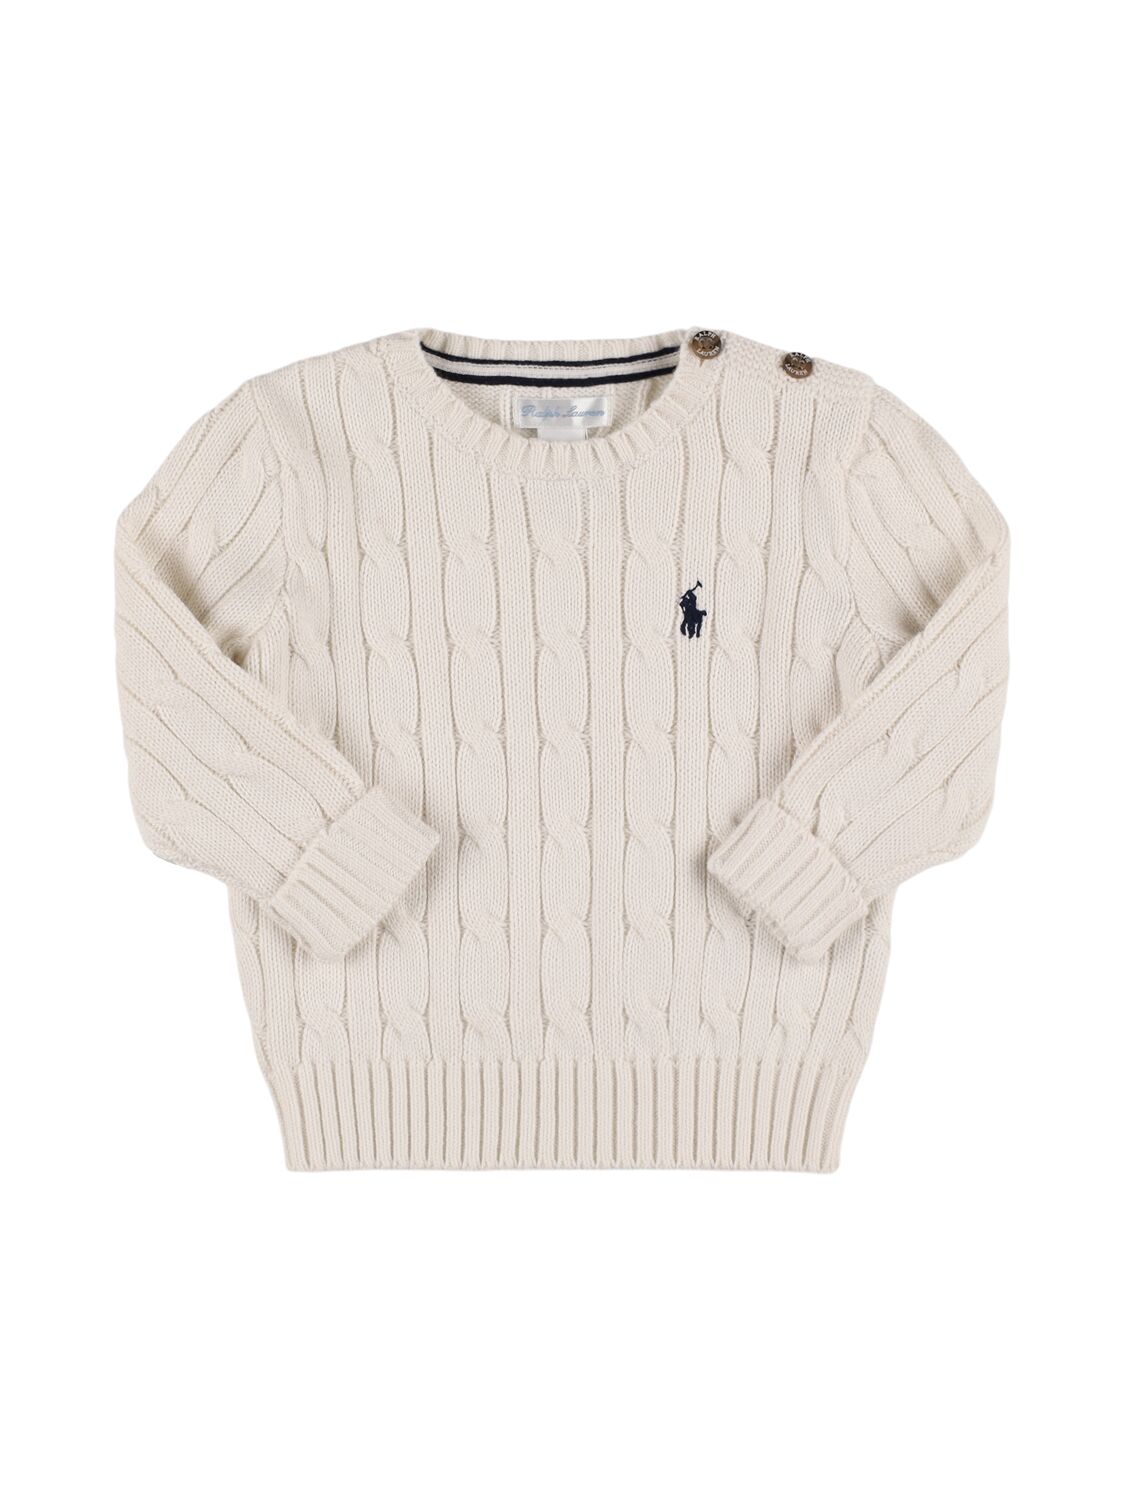 Ralph Lauren Babies' Cotton Knit Sweater In Gray